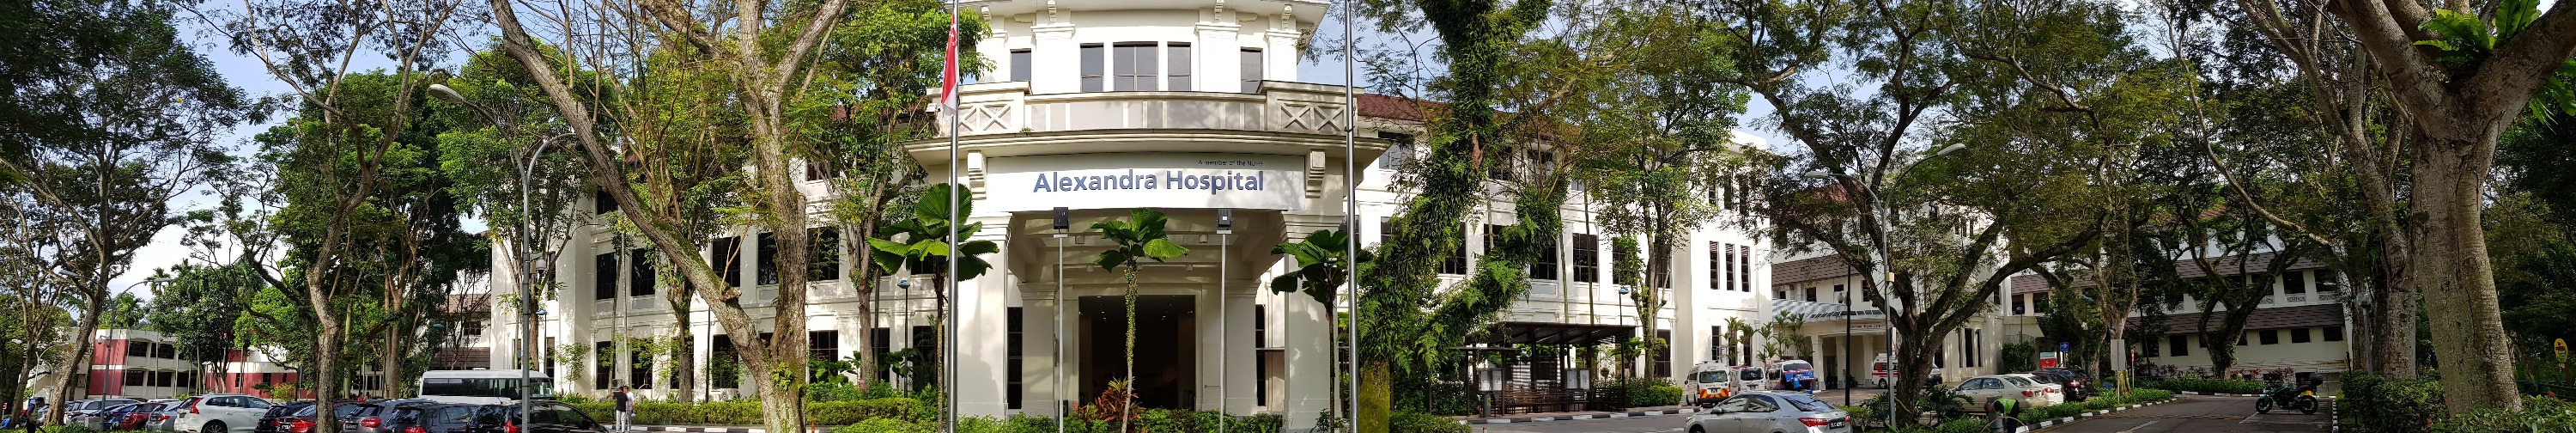 Alexandra Hospital background